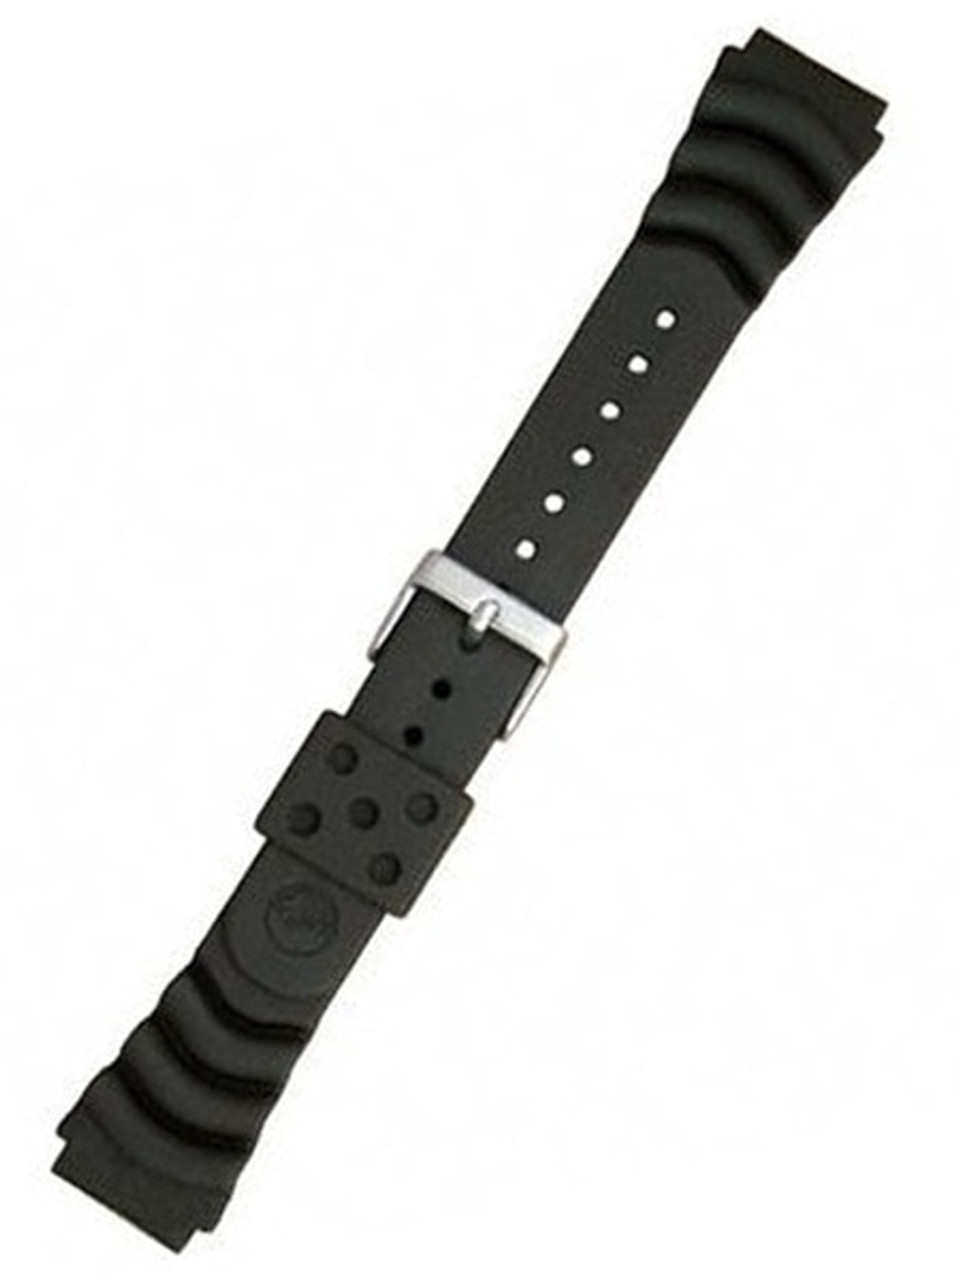 ZULUDIVER SKX Tropical Rubber Watch Strap / Watch Band for Seiko SKX007 SKX009